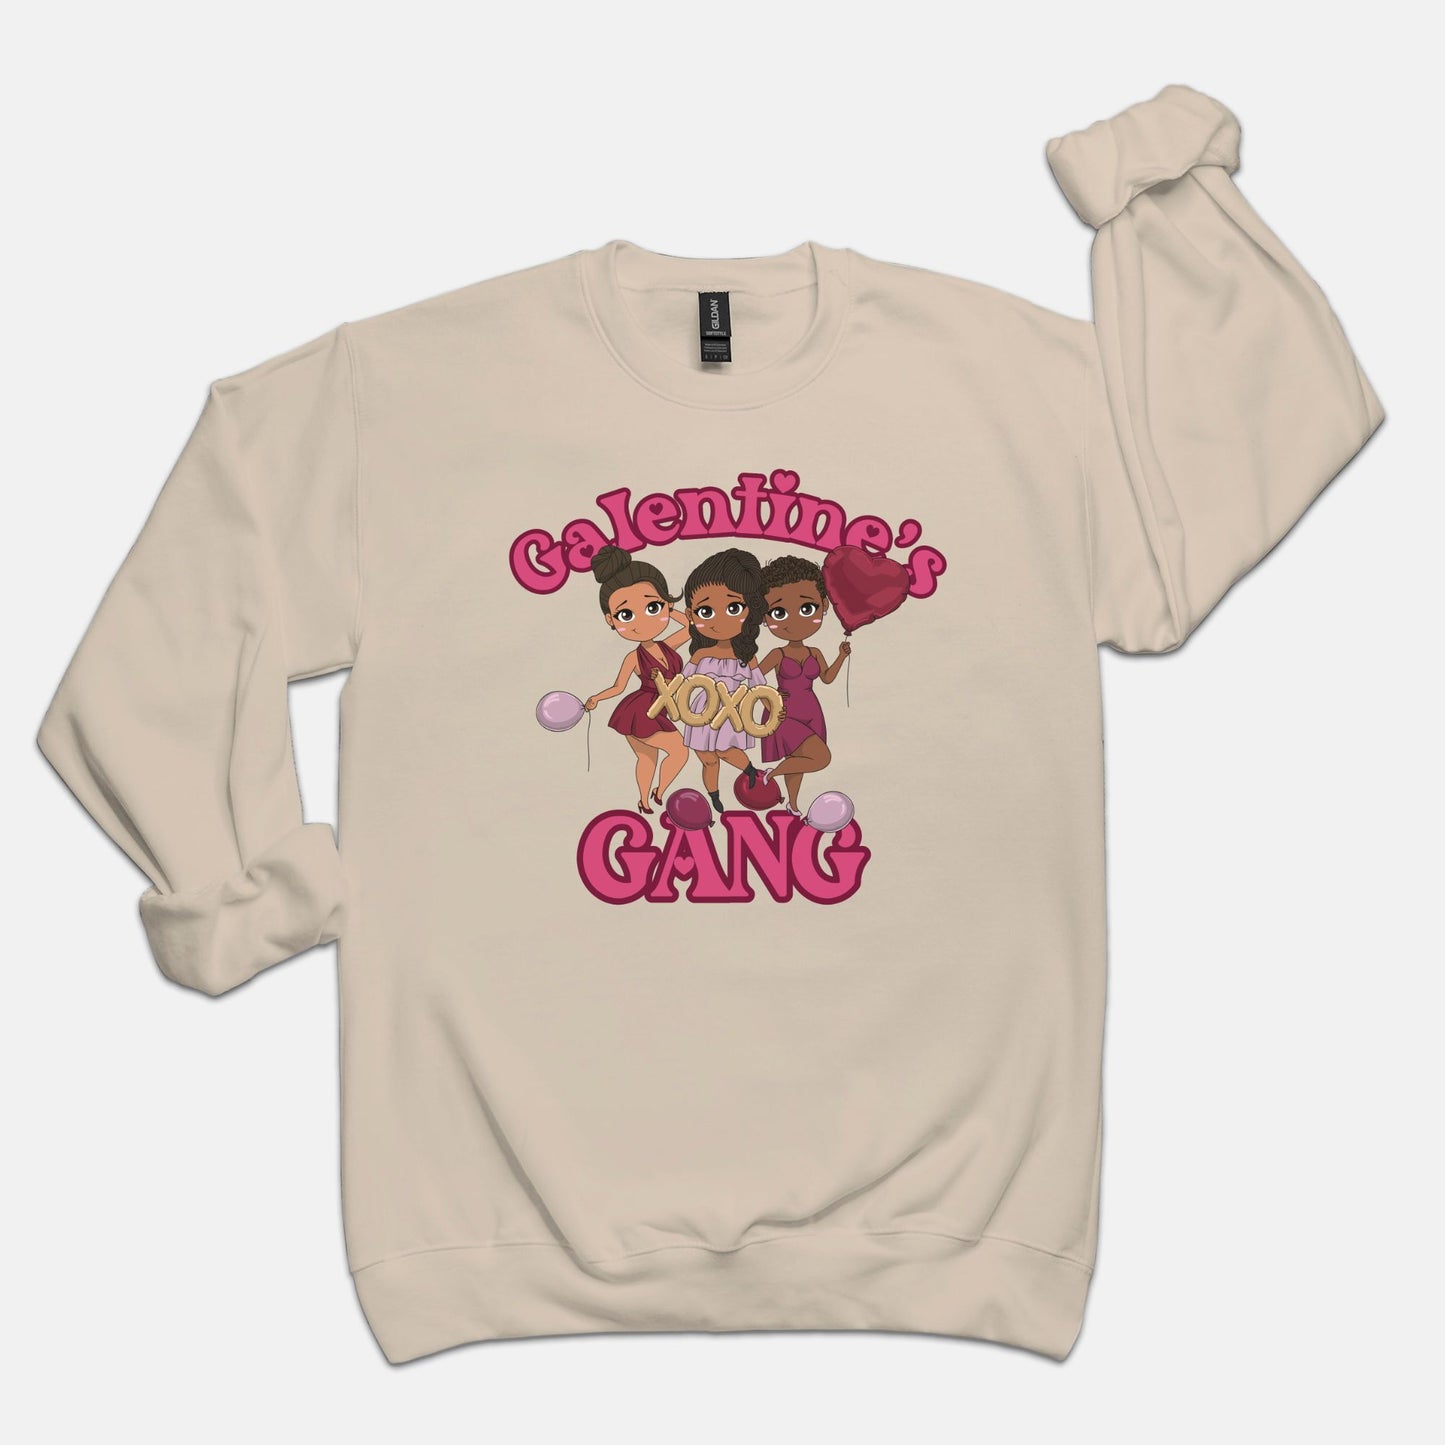 Galentine's Gang Sweatshirt